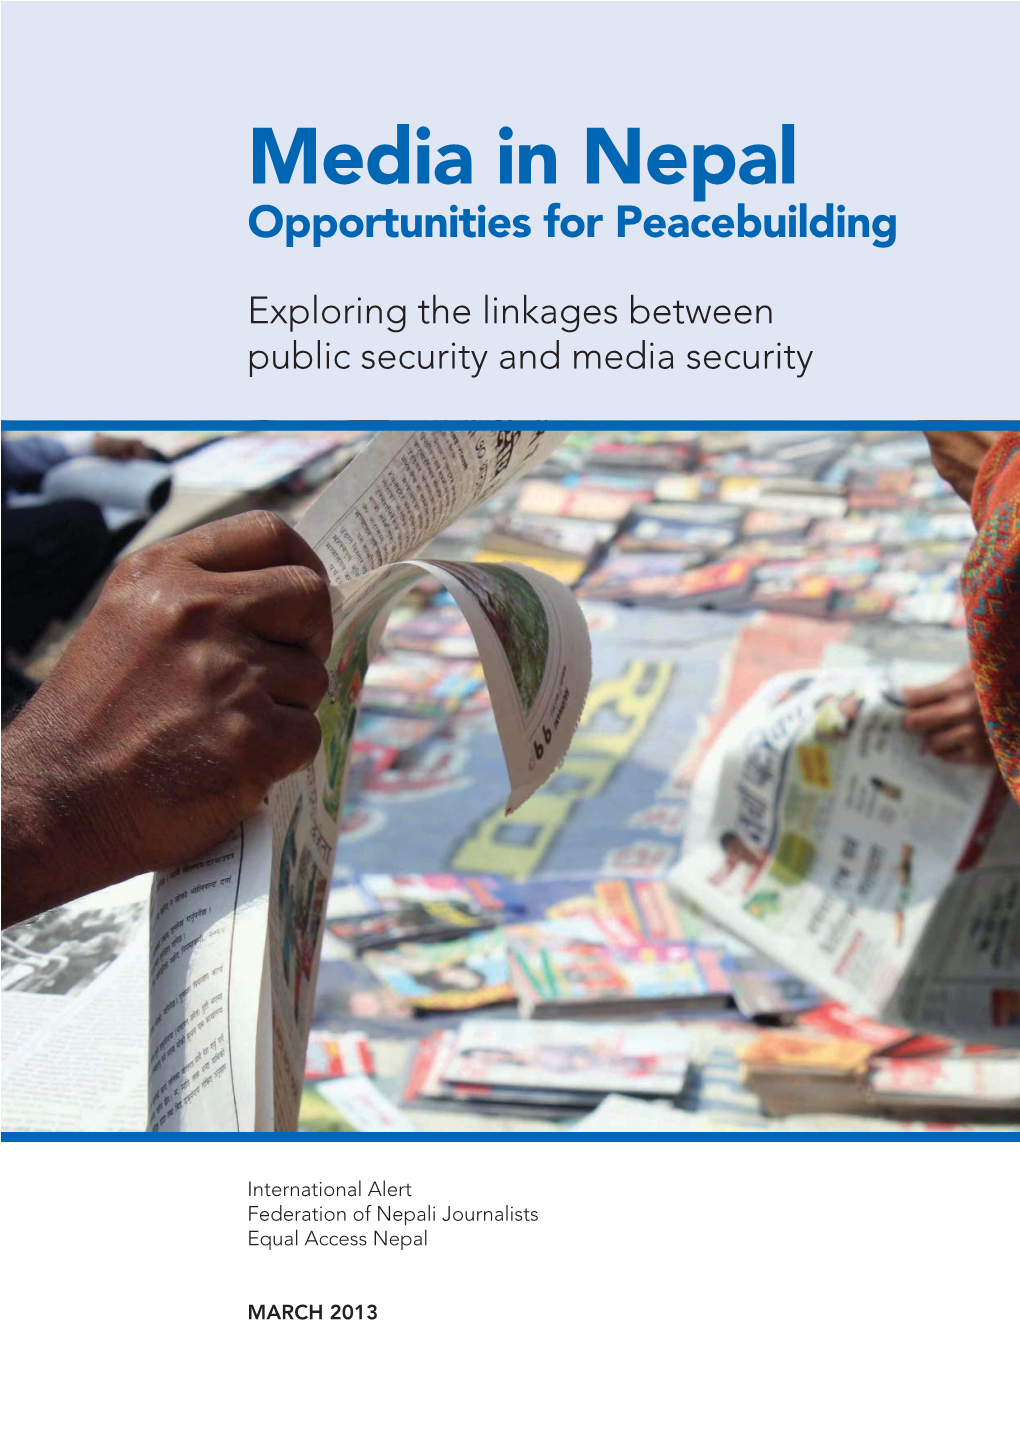 Media in Nepal: Opportunities for Peacebuilding